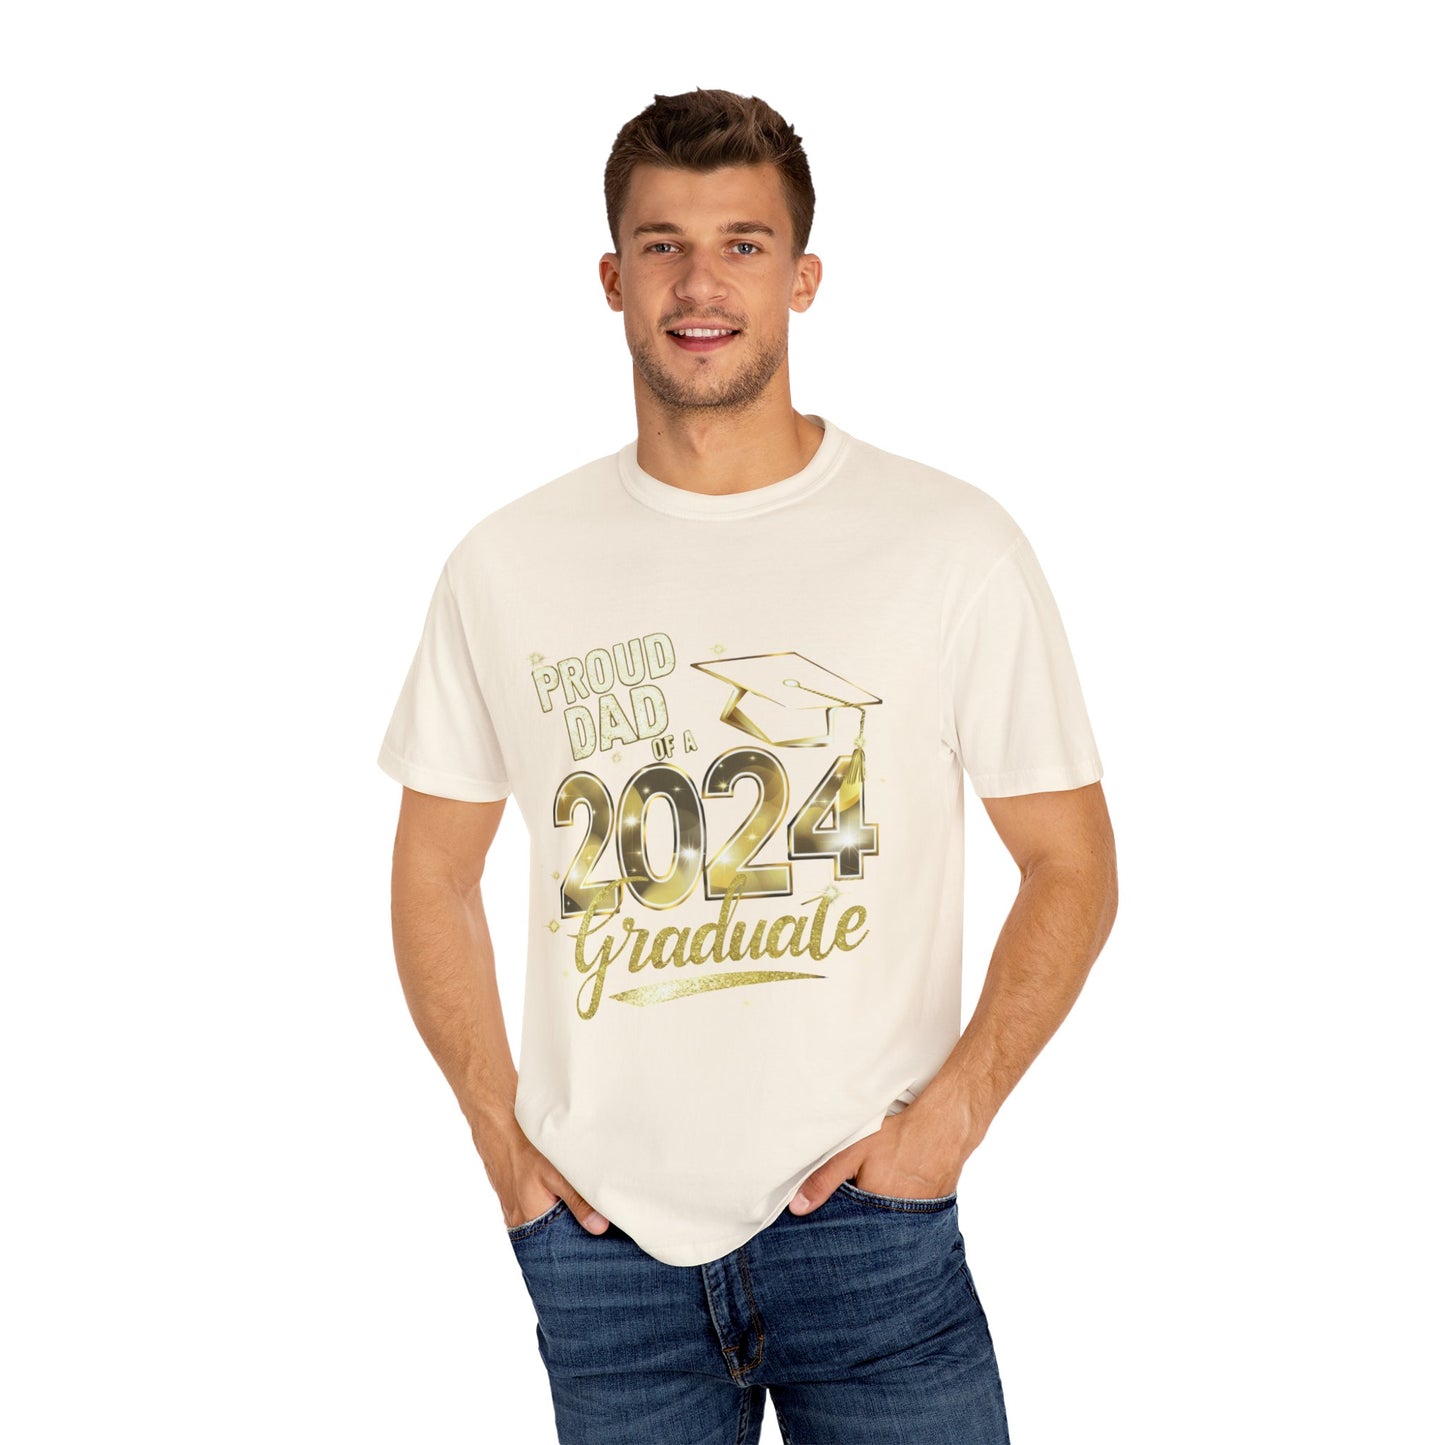 Proud of Dad 2024 Graduate Unisex Garment-dyed T-shirt Cotton Funny Humorous Graphic Soft Premium Unisex Men Women Ivory T-shirt Birthday Gift-45